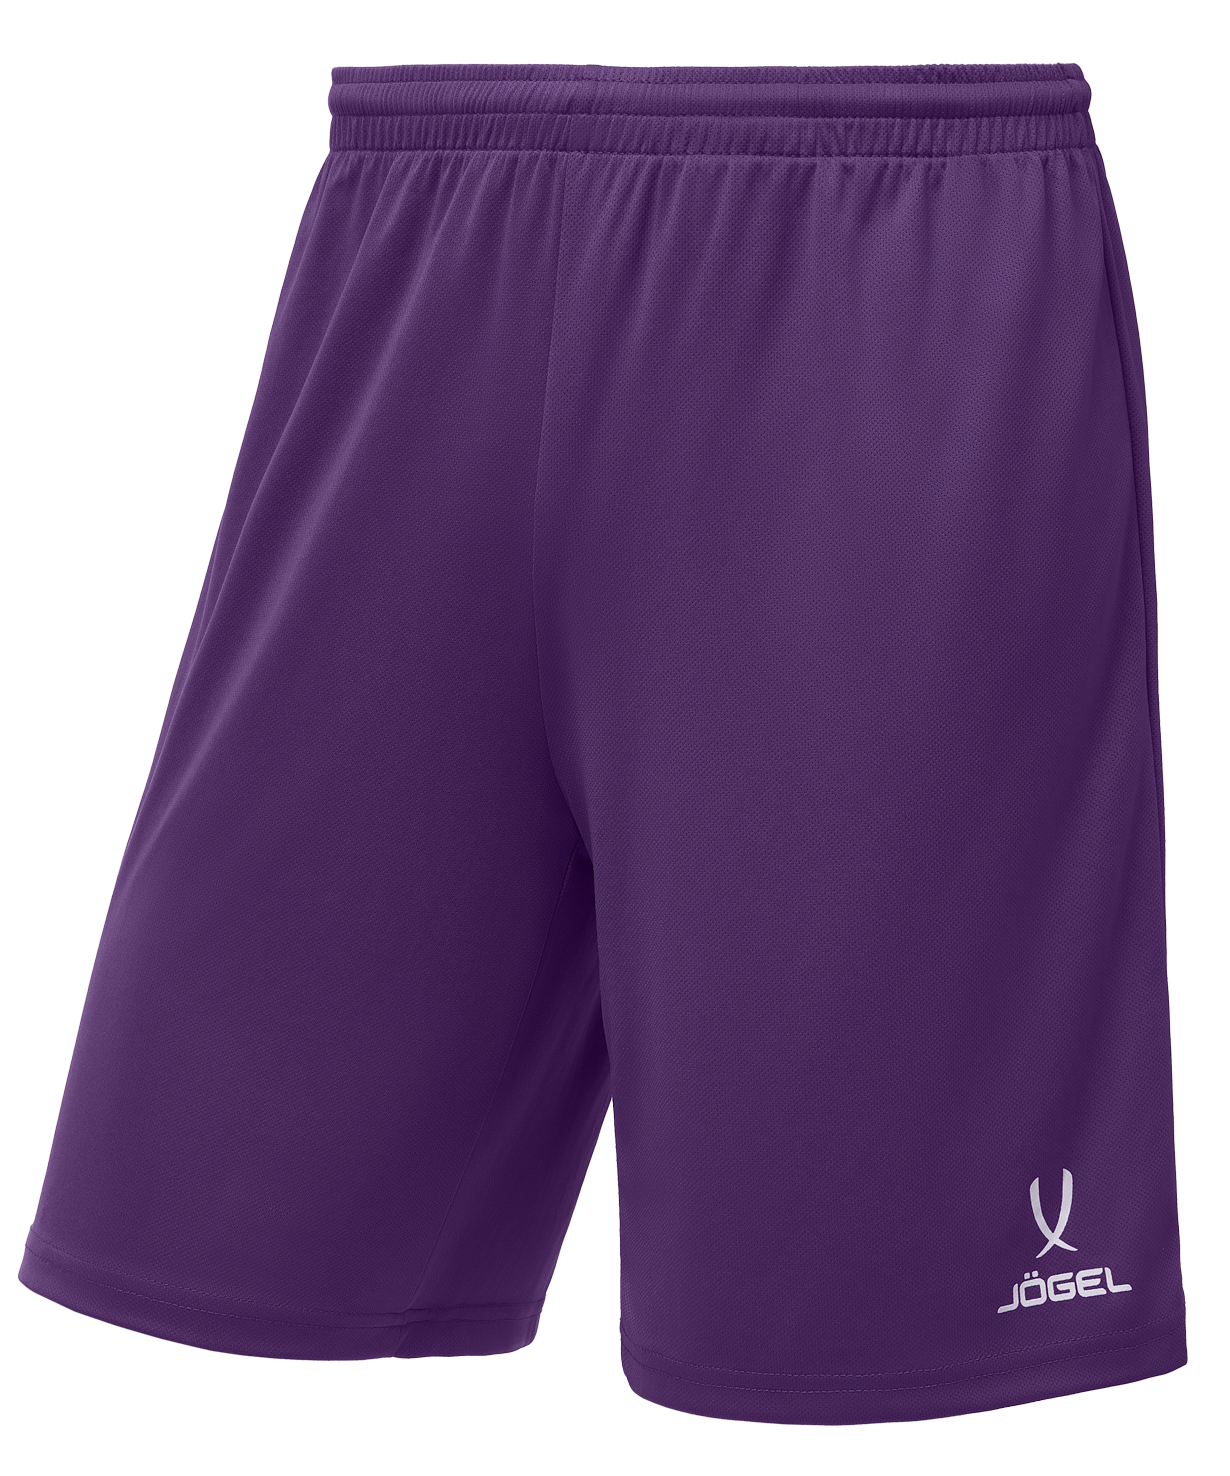 Шорты баскетбольные Jogel Camp Basic, фиолетовый, детский - YL гольфы футбольные jogel camp basic sleeve socks желтый белый